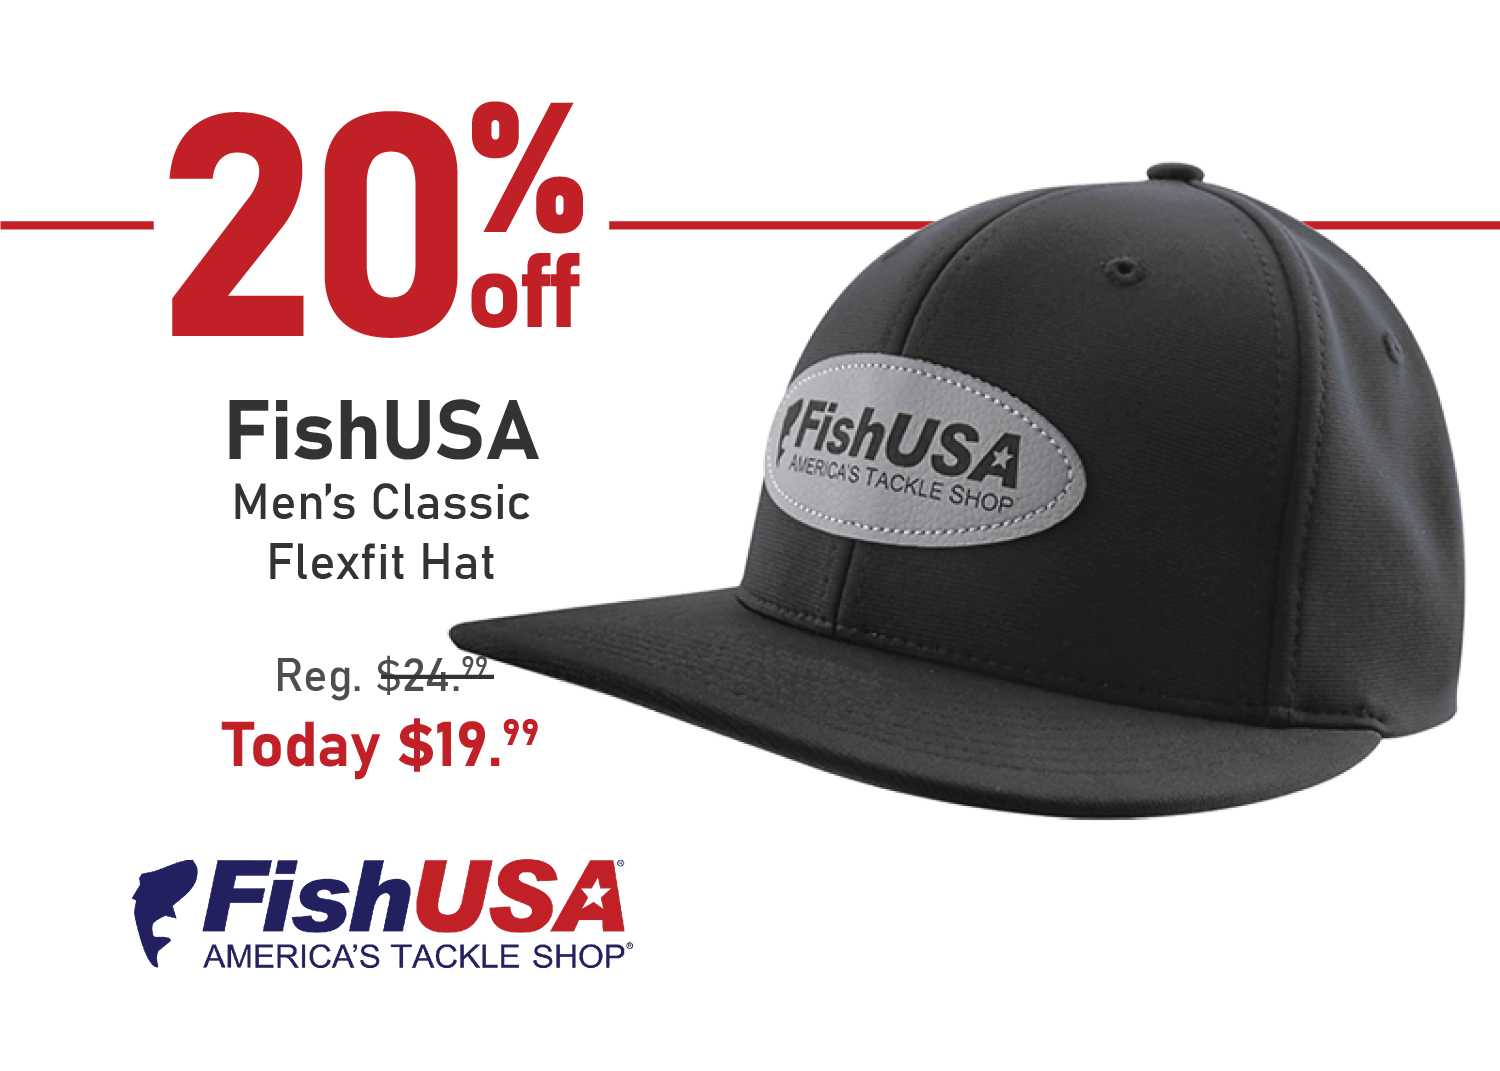 Save 20% on the FishUSA Men's Classic Flexfit Hat